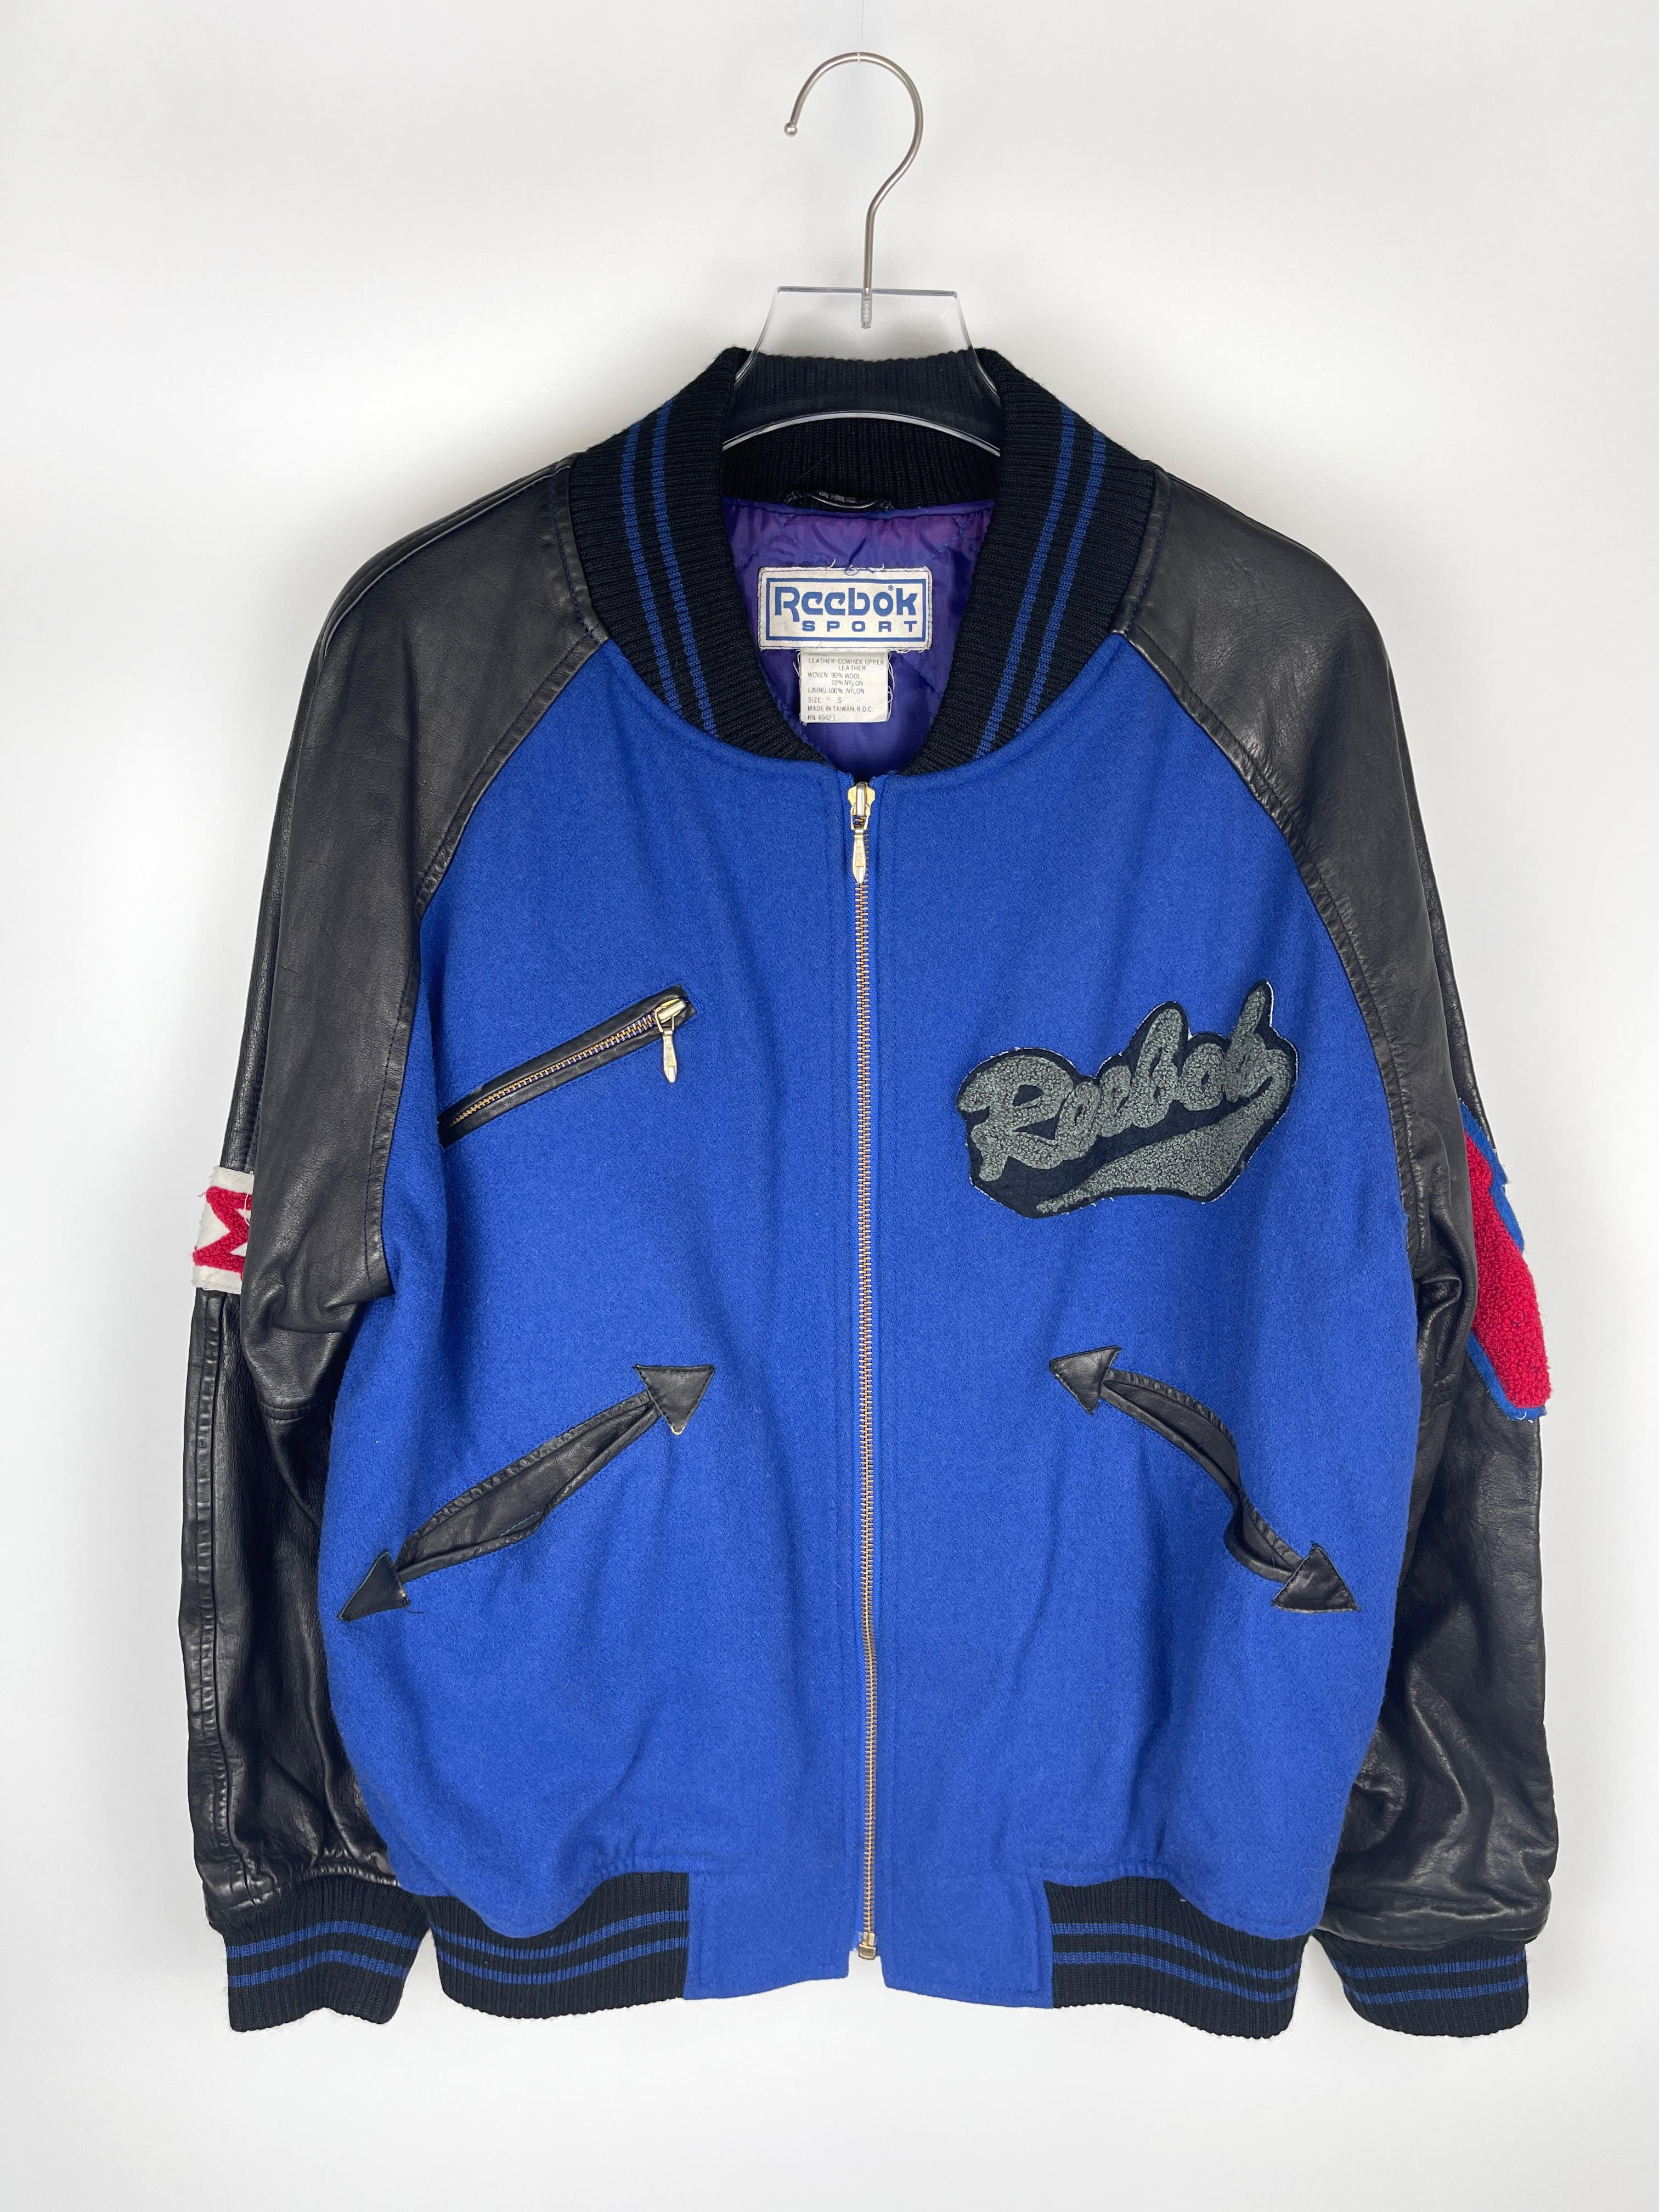 Vintage Reebok 1990's Varsity Team Jacket For Sale 1